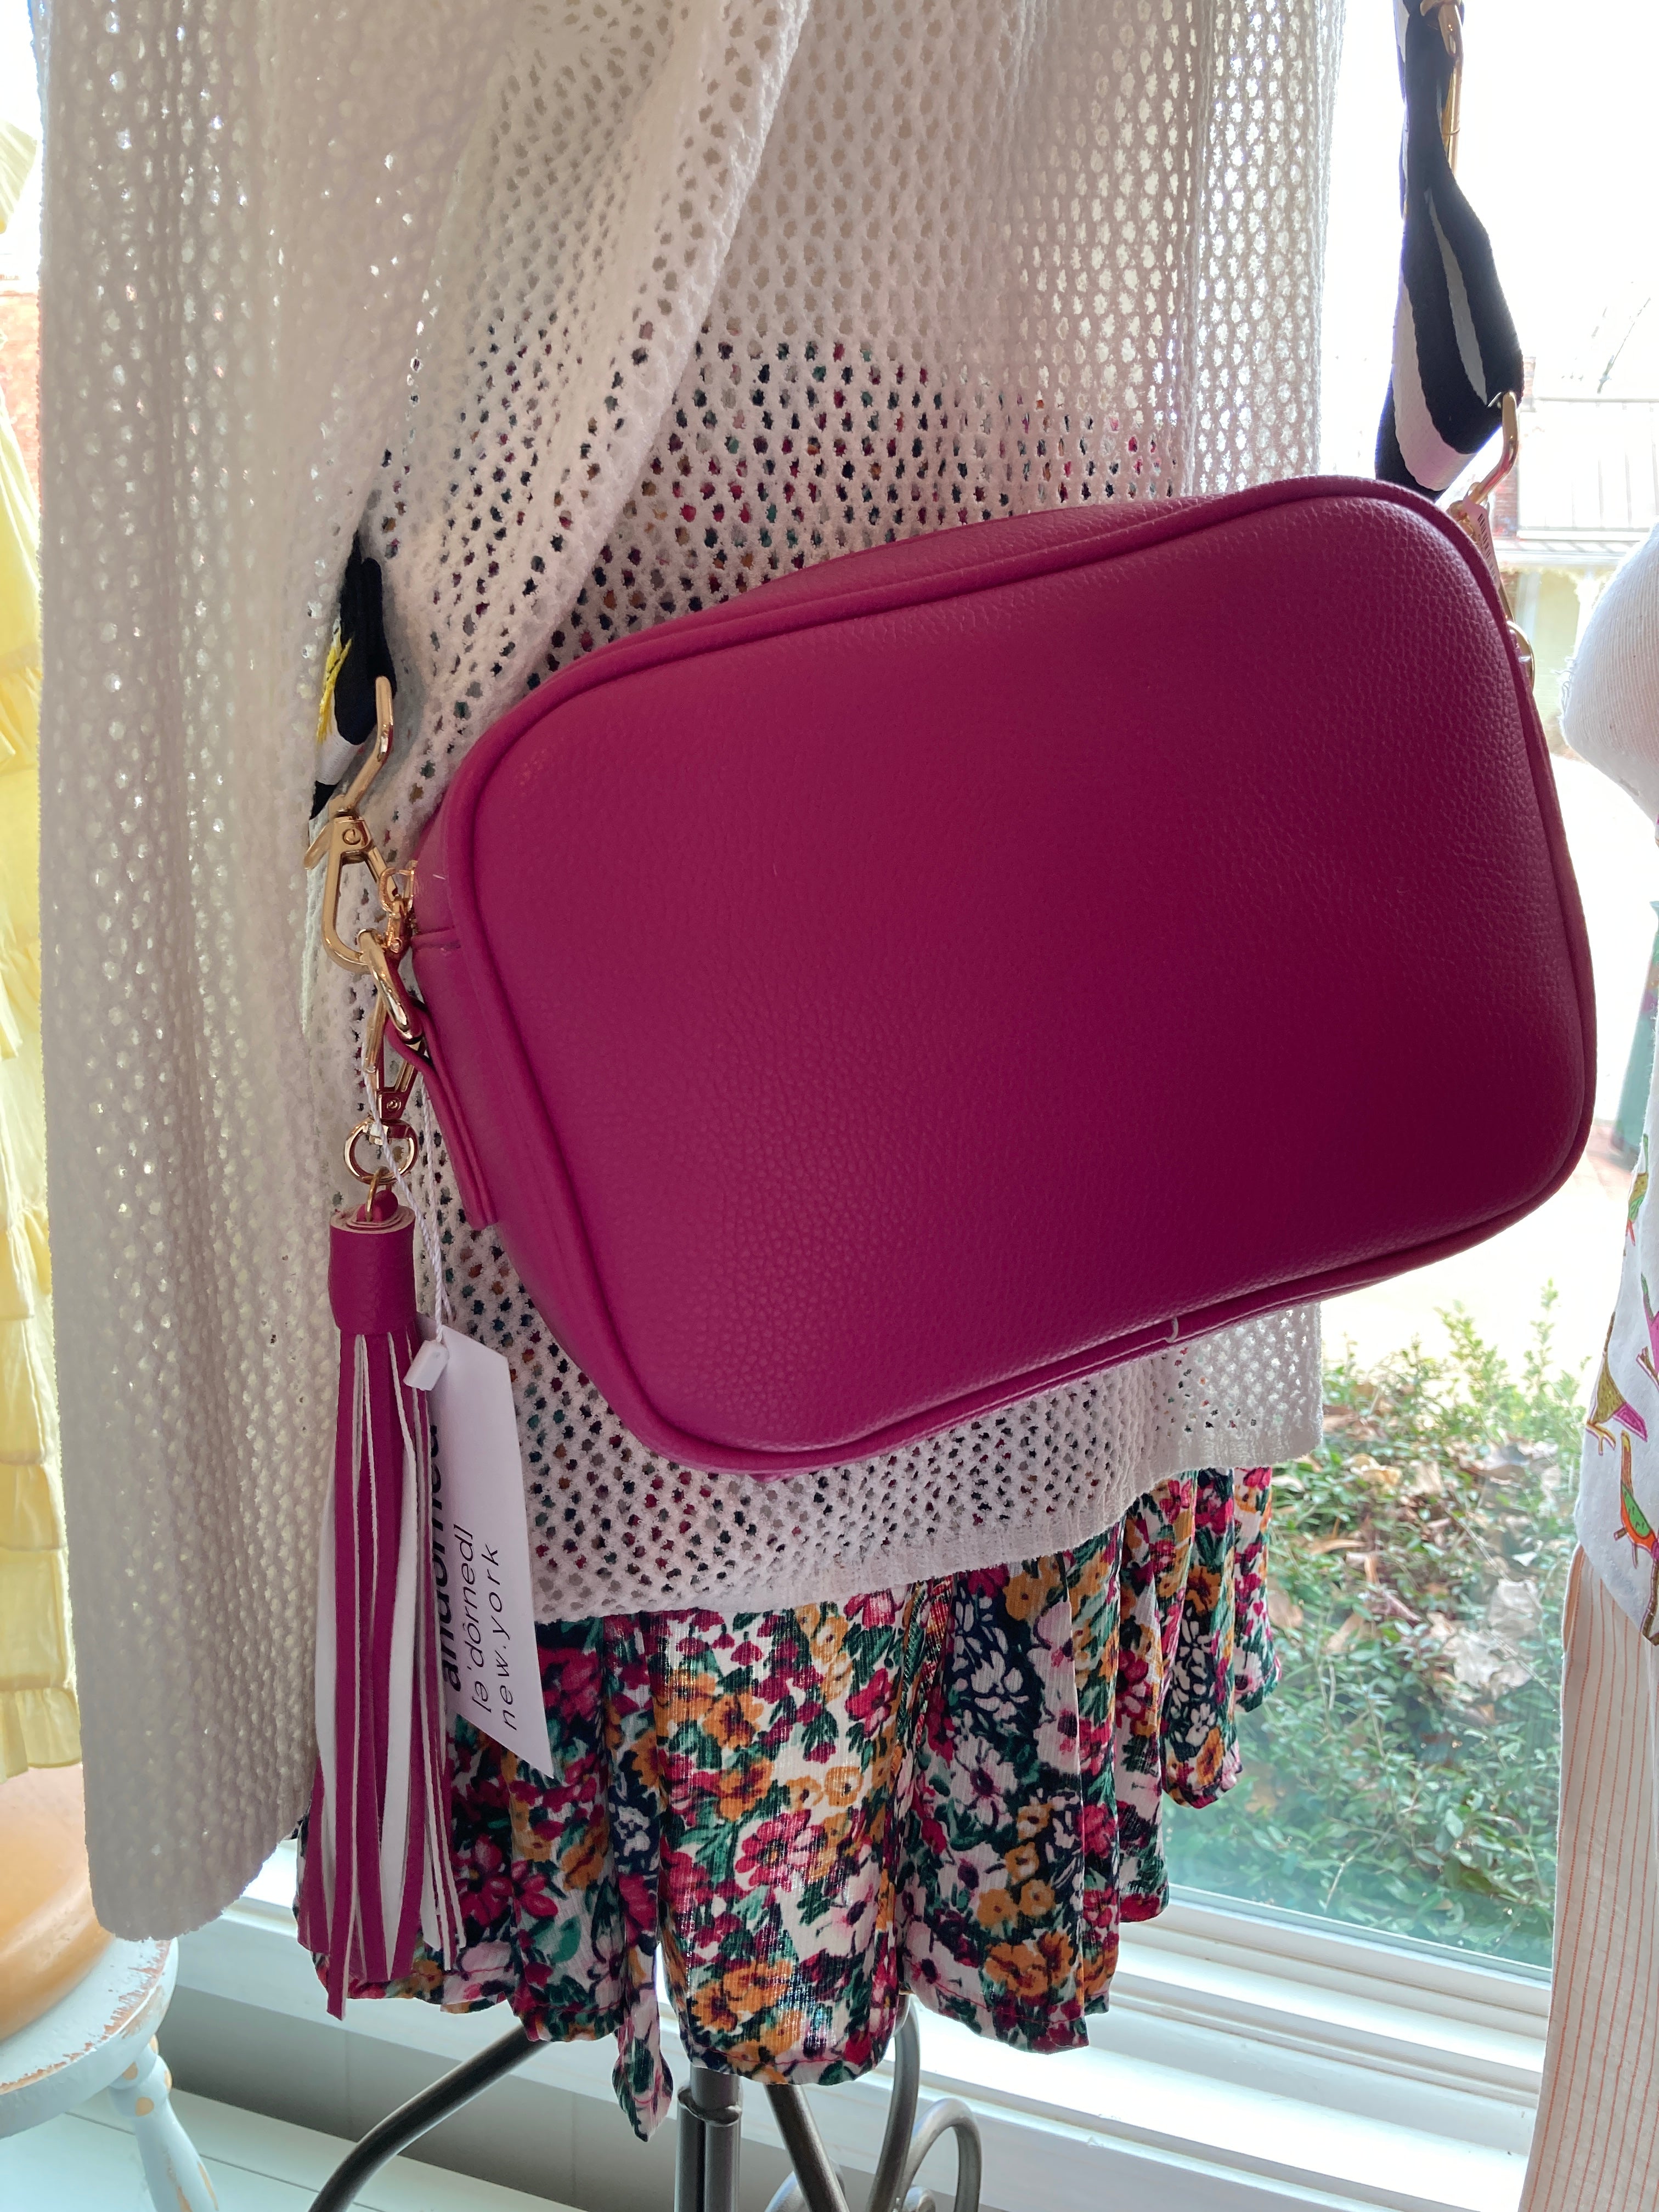 Ahdorned Crossbody Bag With Tassell - Hot Pink